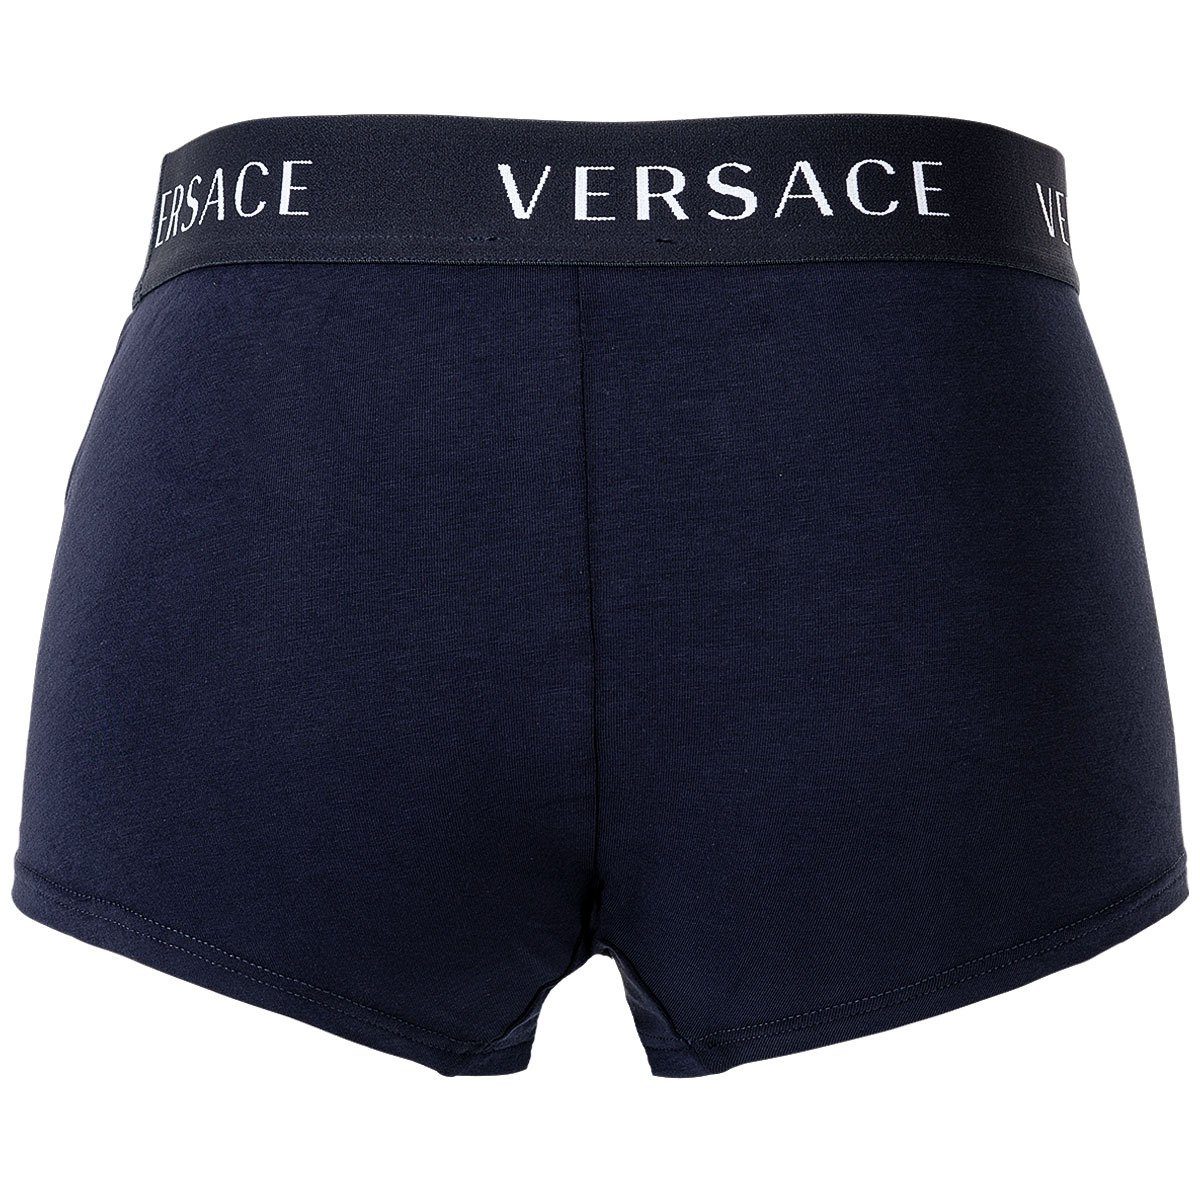 Versace Boxer Herren Boxer Shorts, - Weiß/Blau Pack 2er Trunk